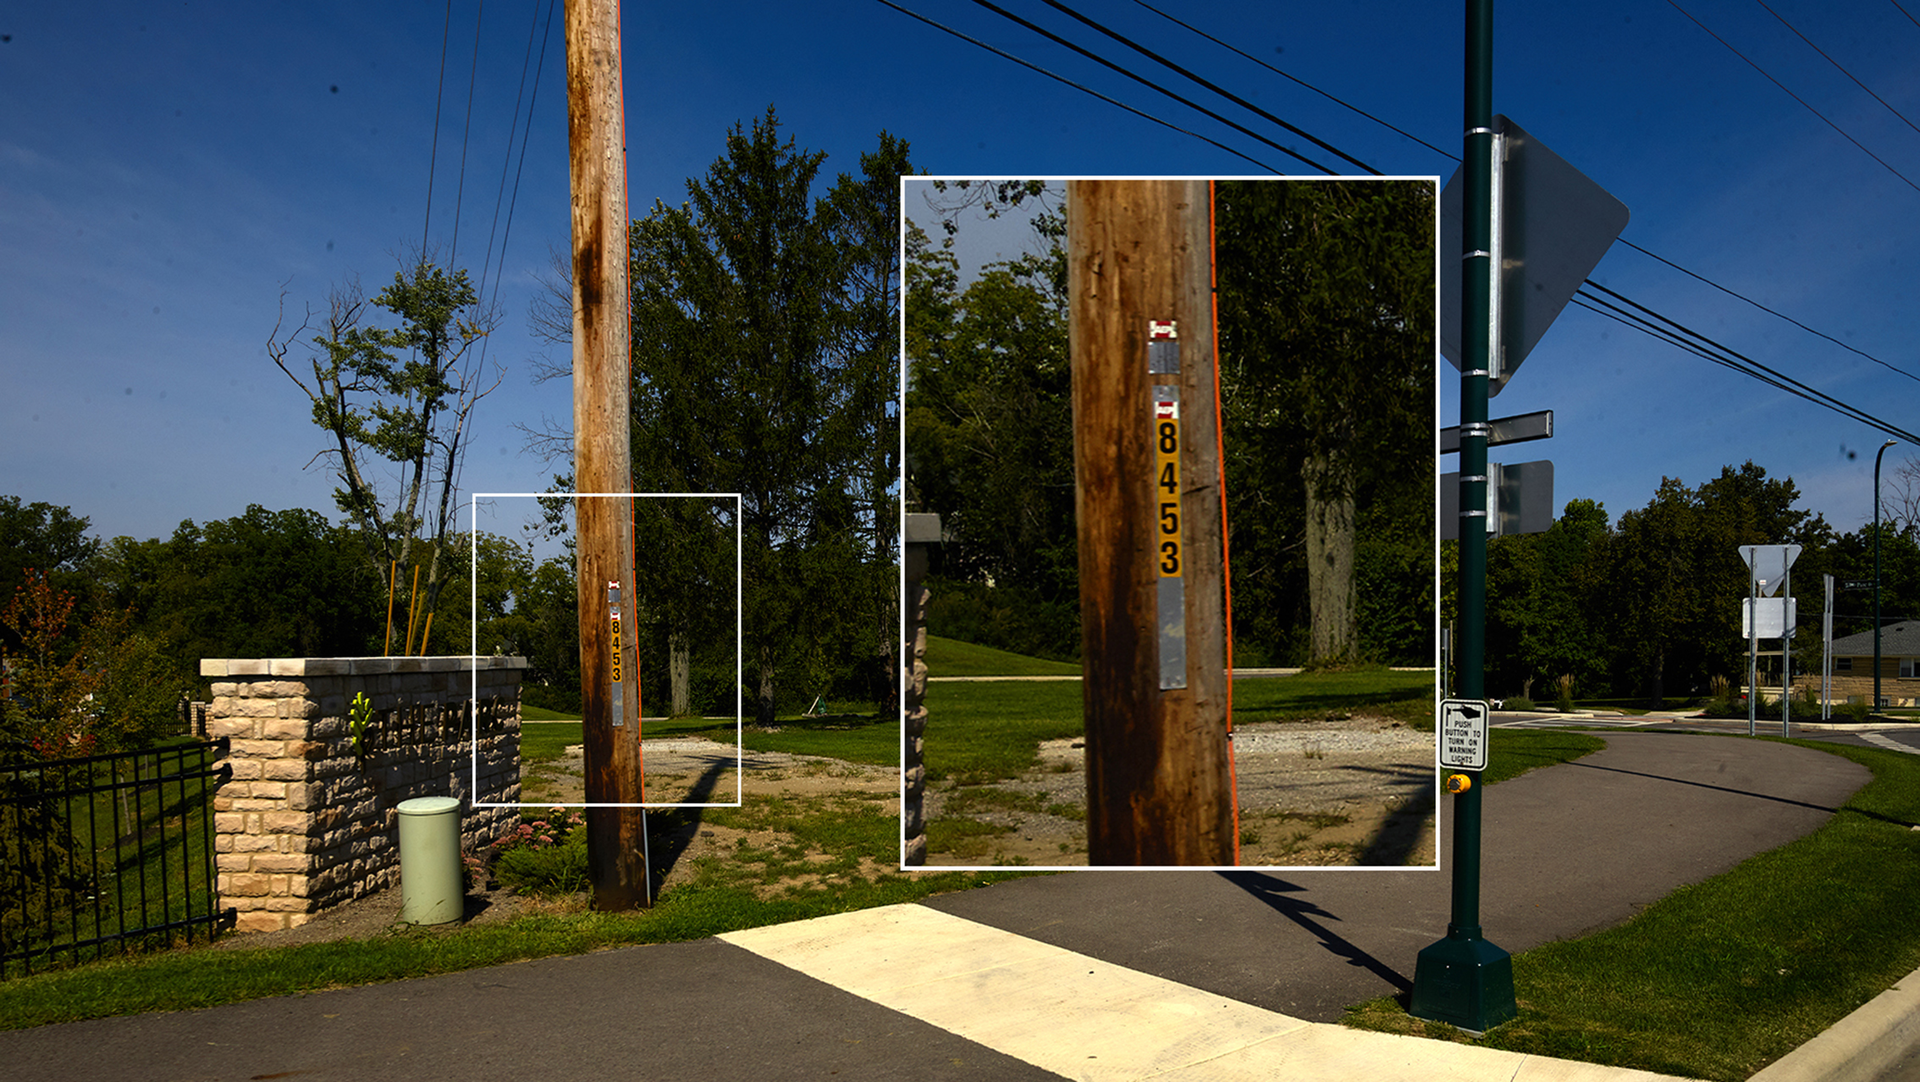 utility pole guy wire installation